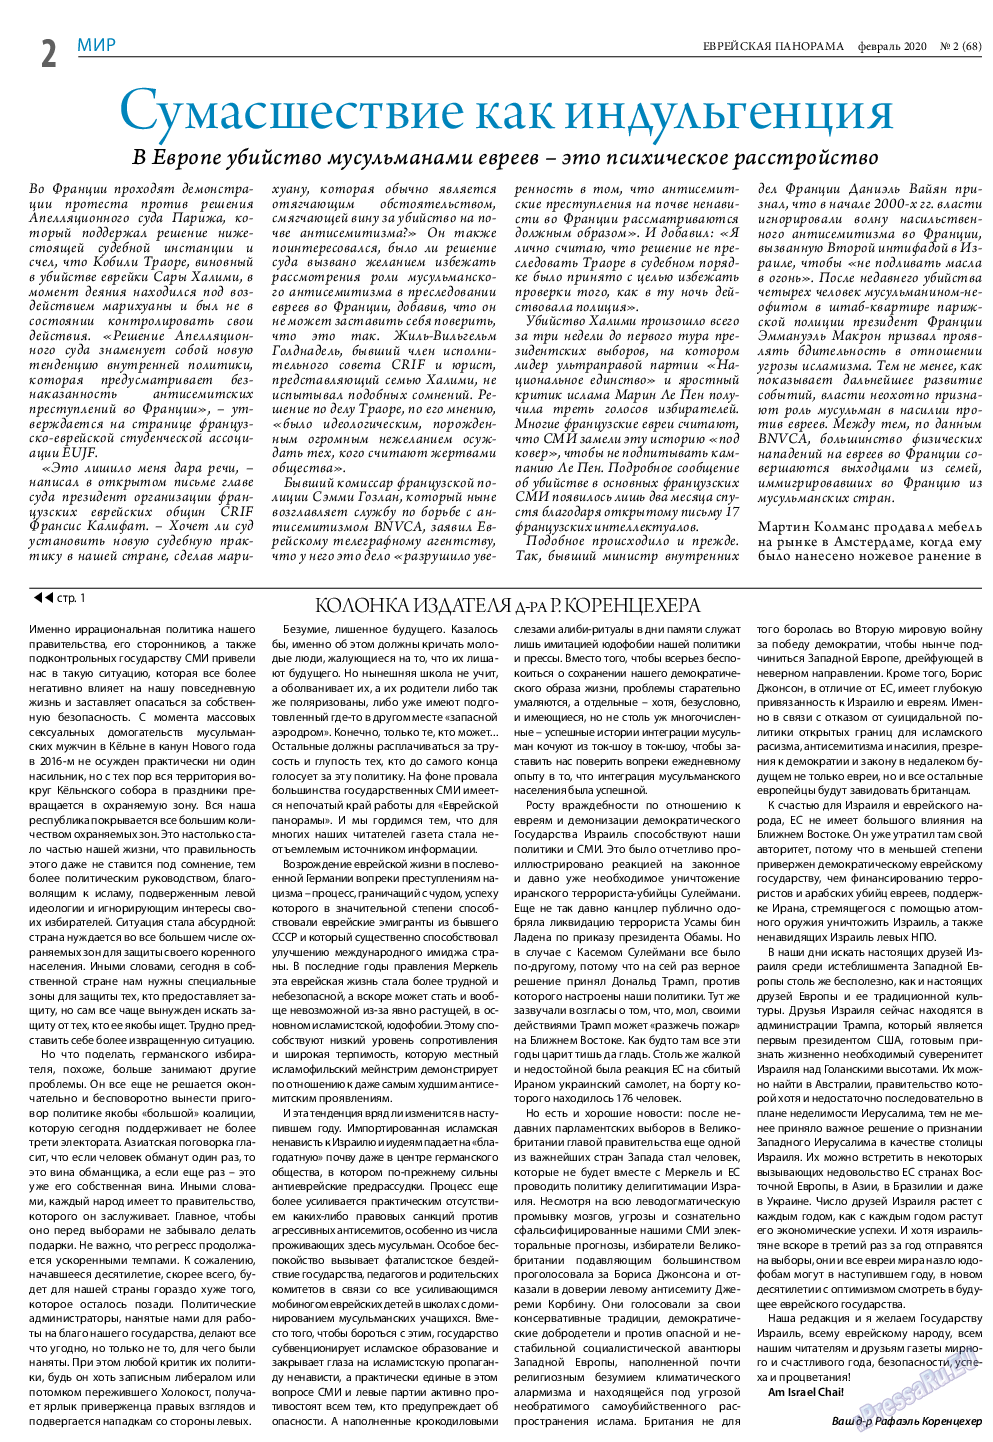 Еврейская панорама, газета. 2020 №2 стр.2